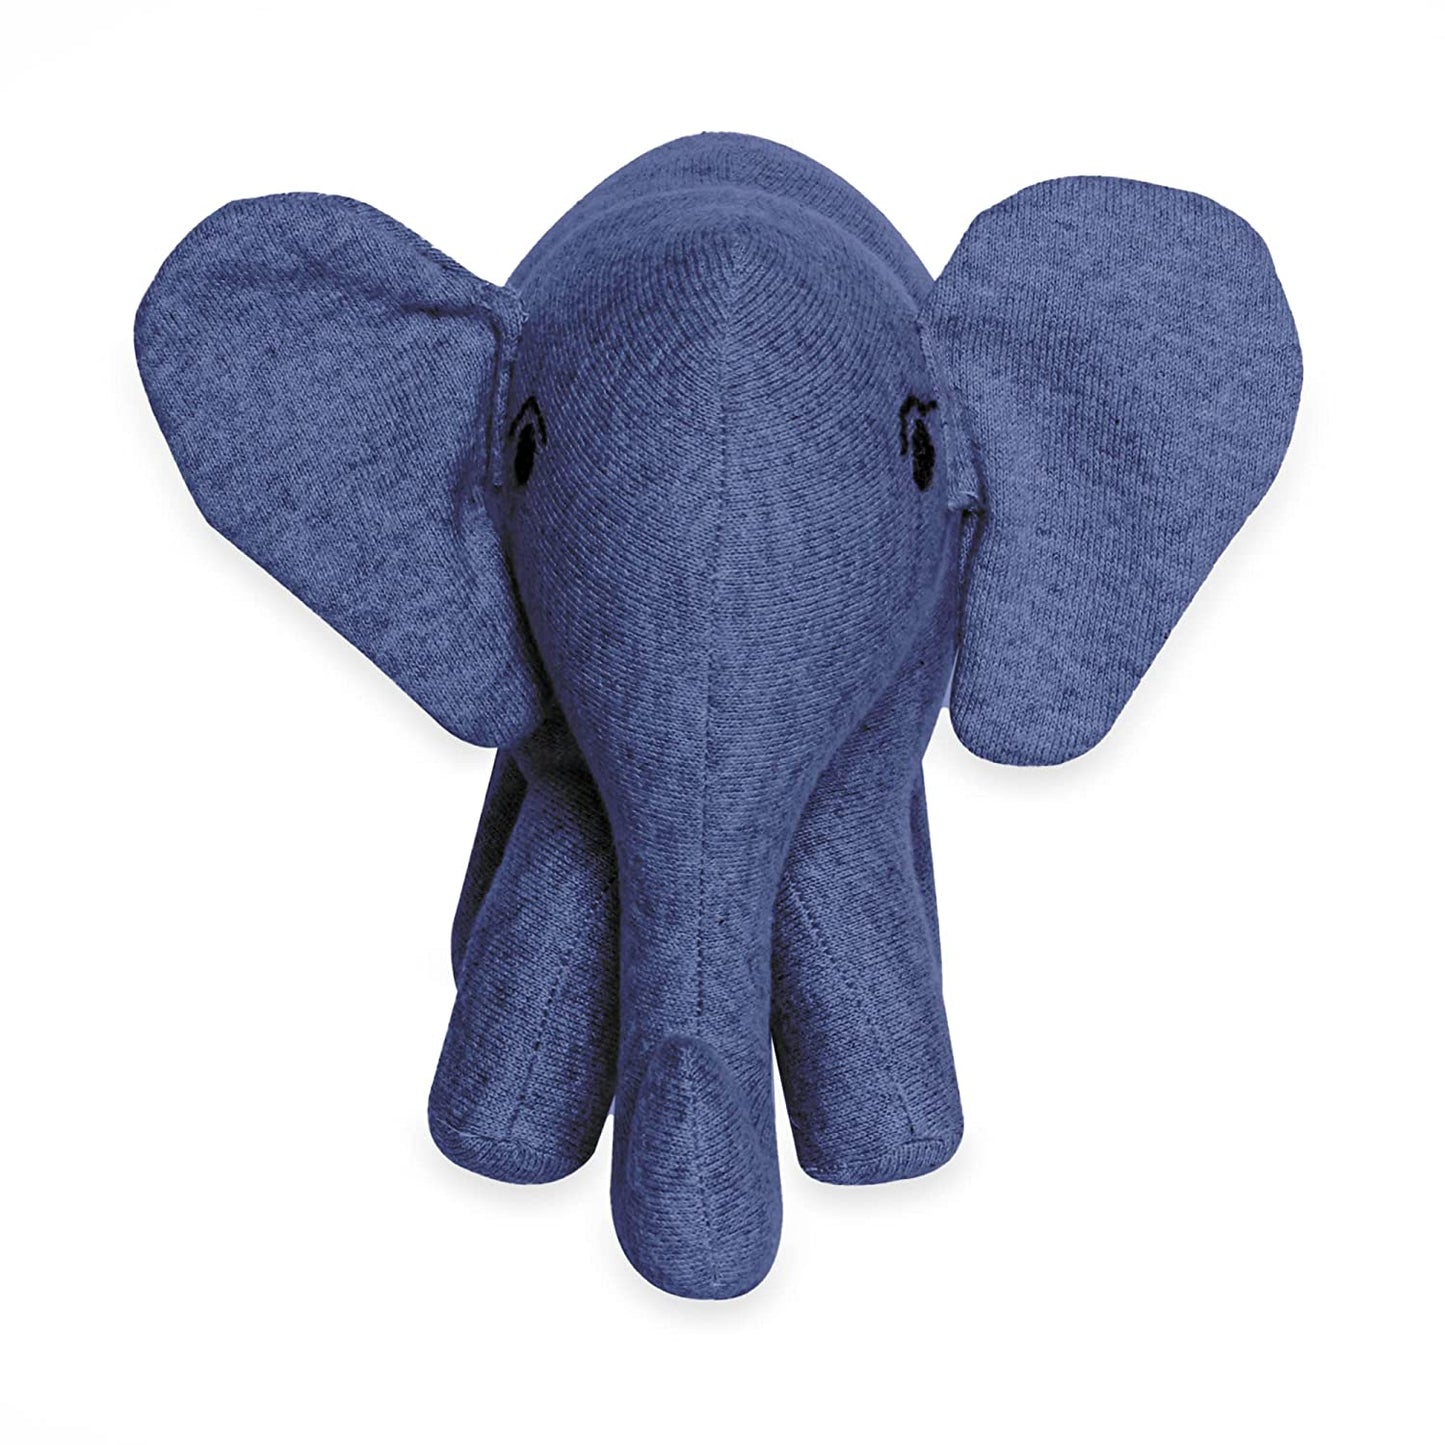 Small Soft Cute Elephant Stuffed Soft Plush Animal Toy for Kids Room Home Decoration Birhtady Gift Toys (9cm,Blue))